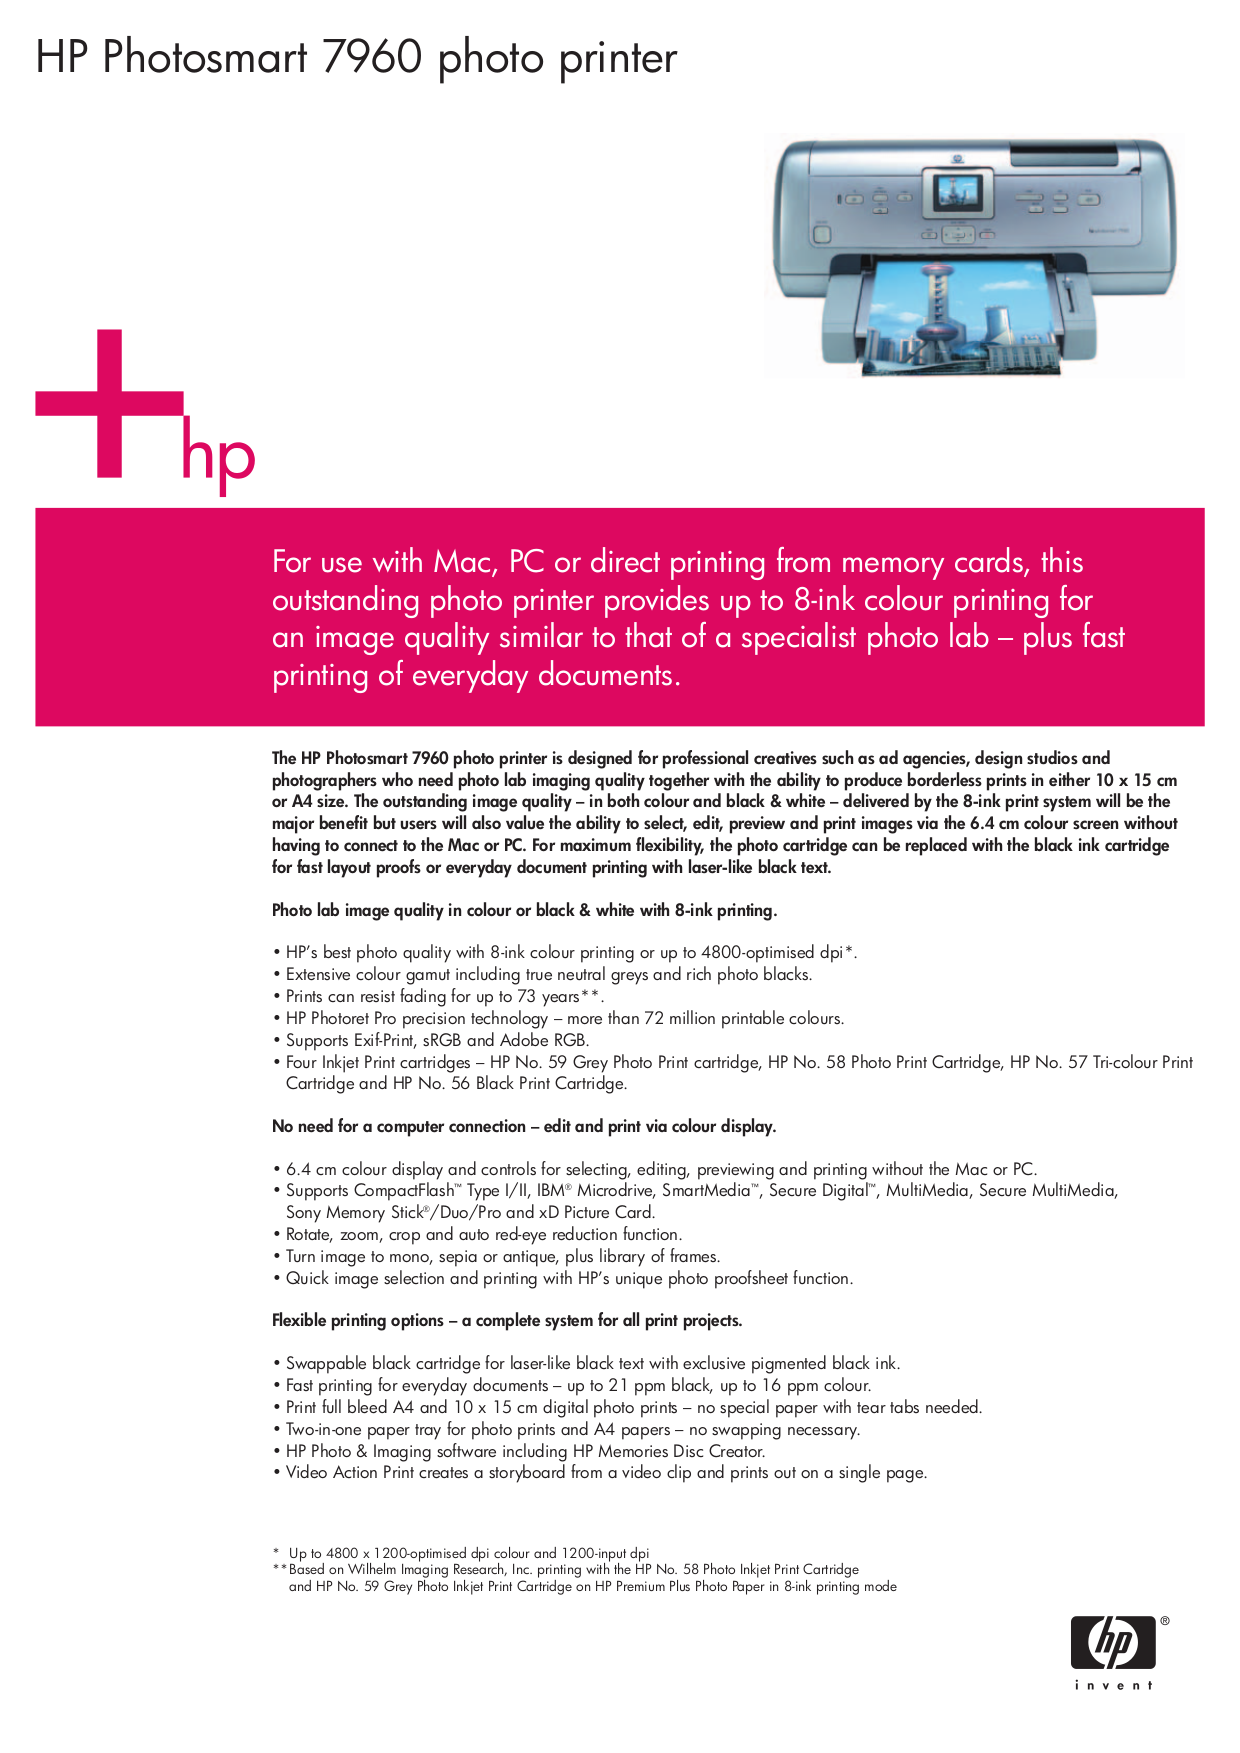 Download free pdf for HP Photosmart 7960 Printer manual